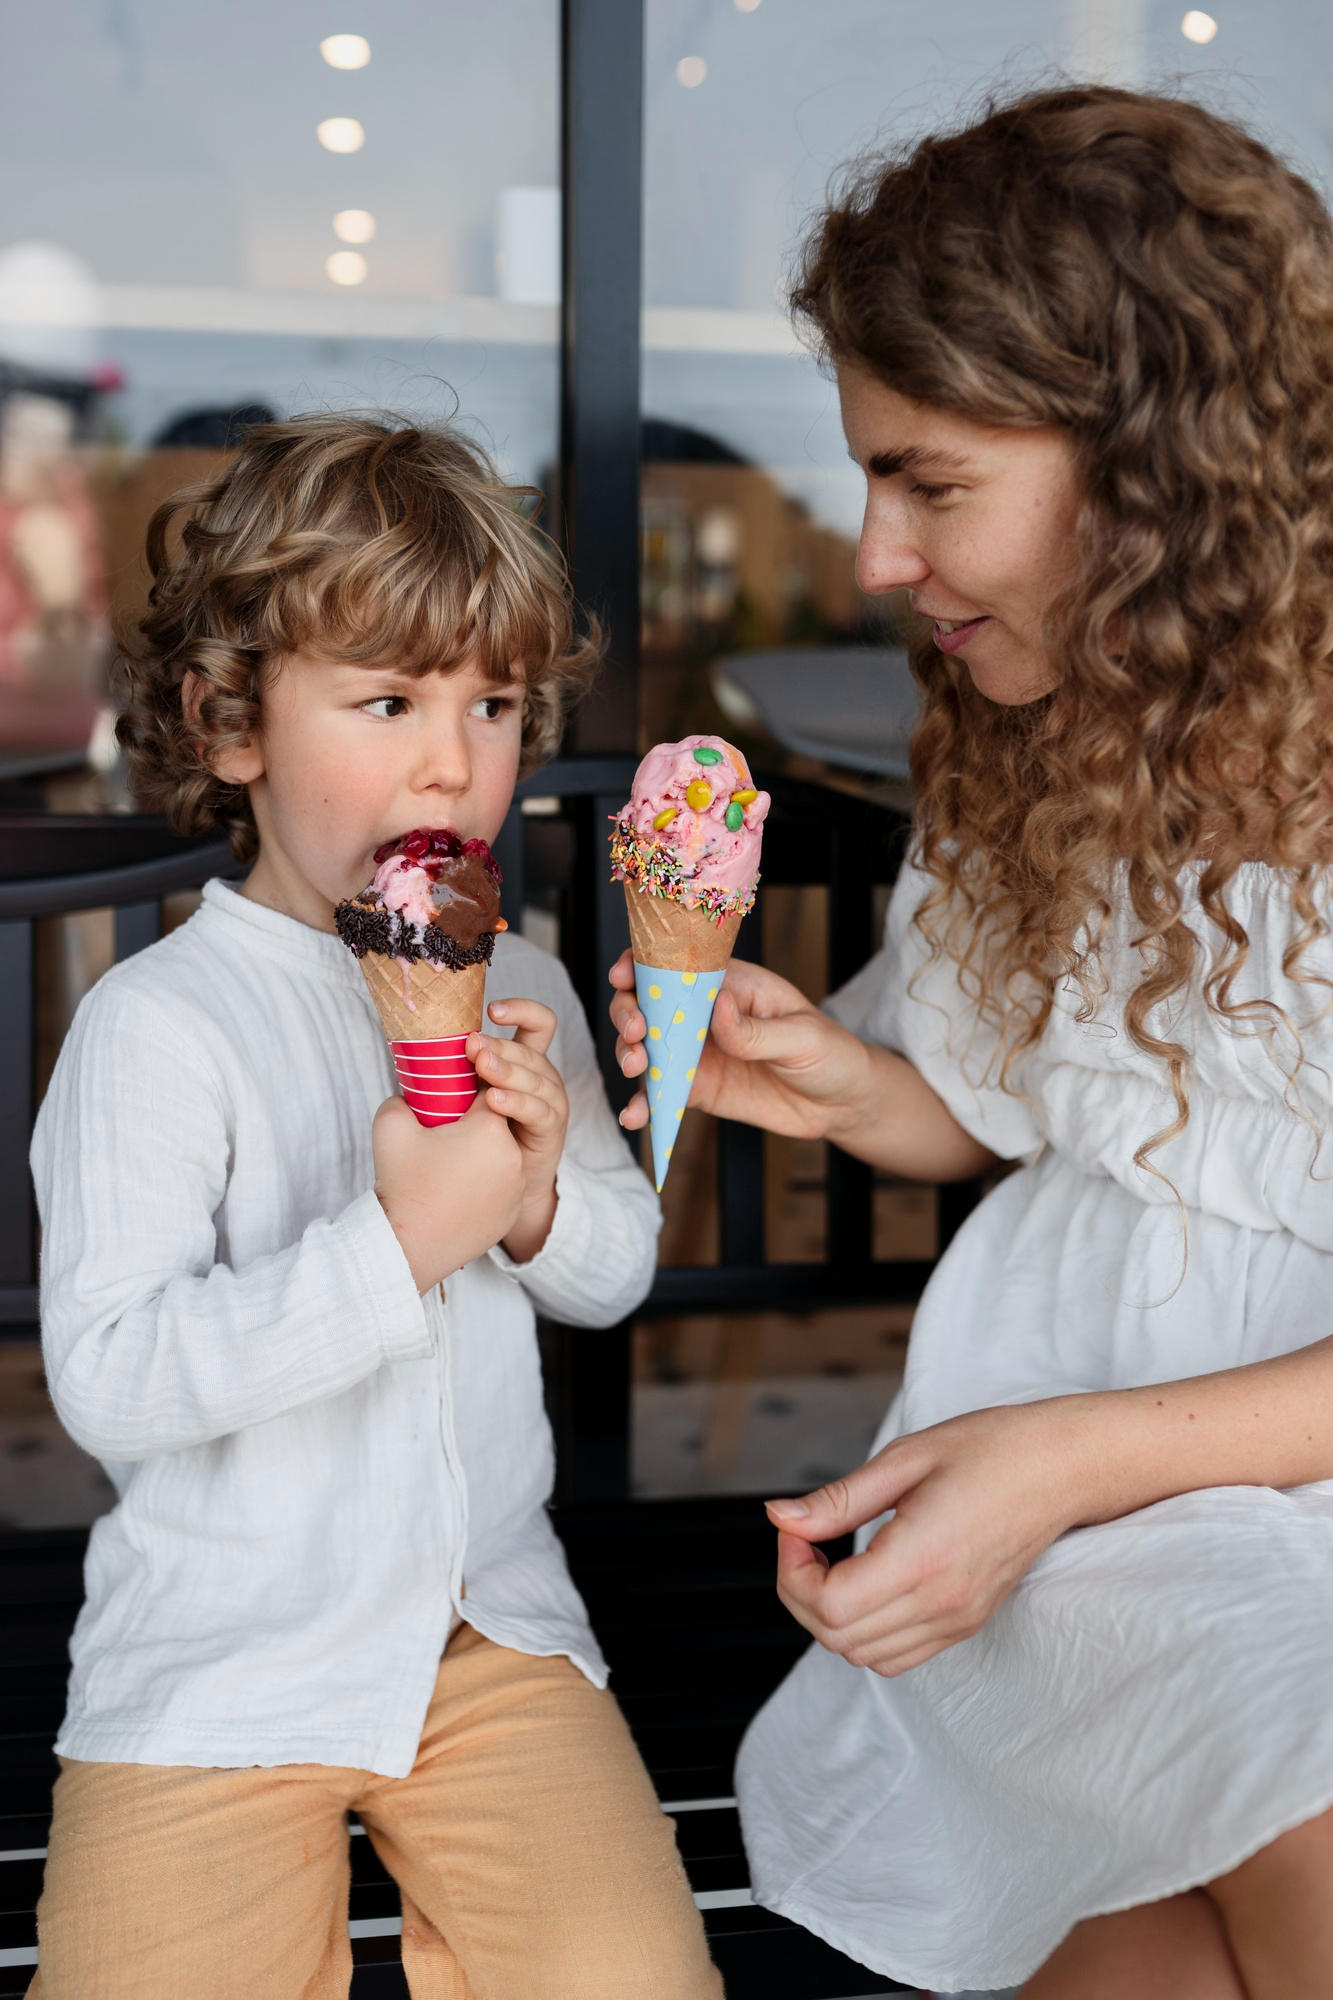 A woman giving ice cream cones to a little boy | Source: Freepik